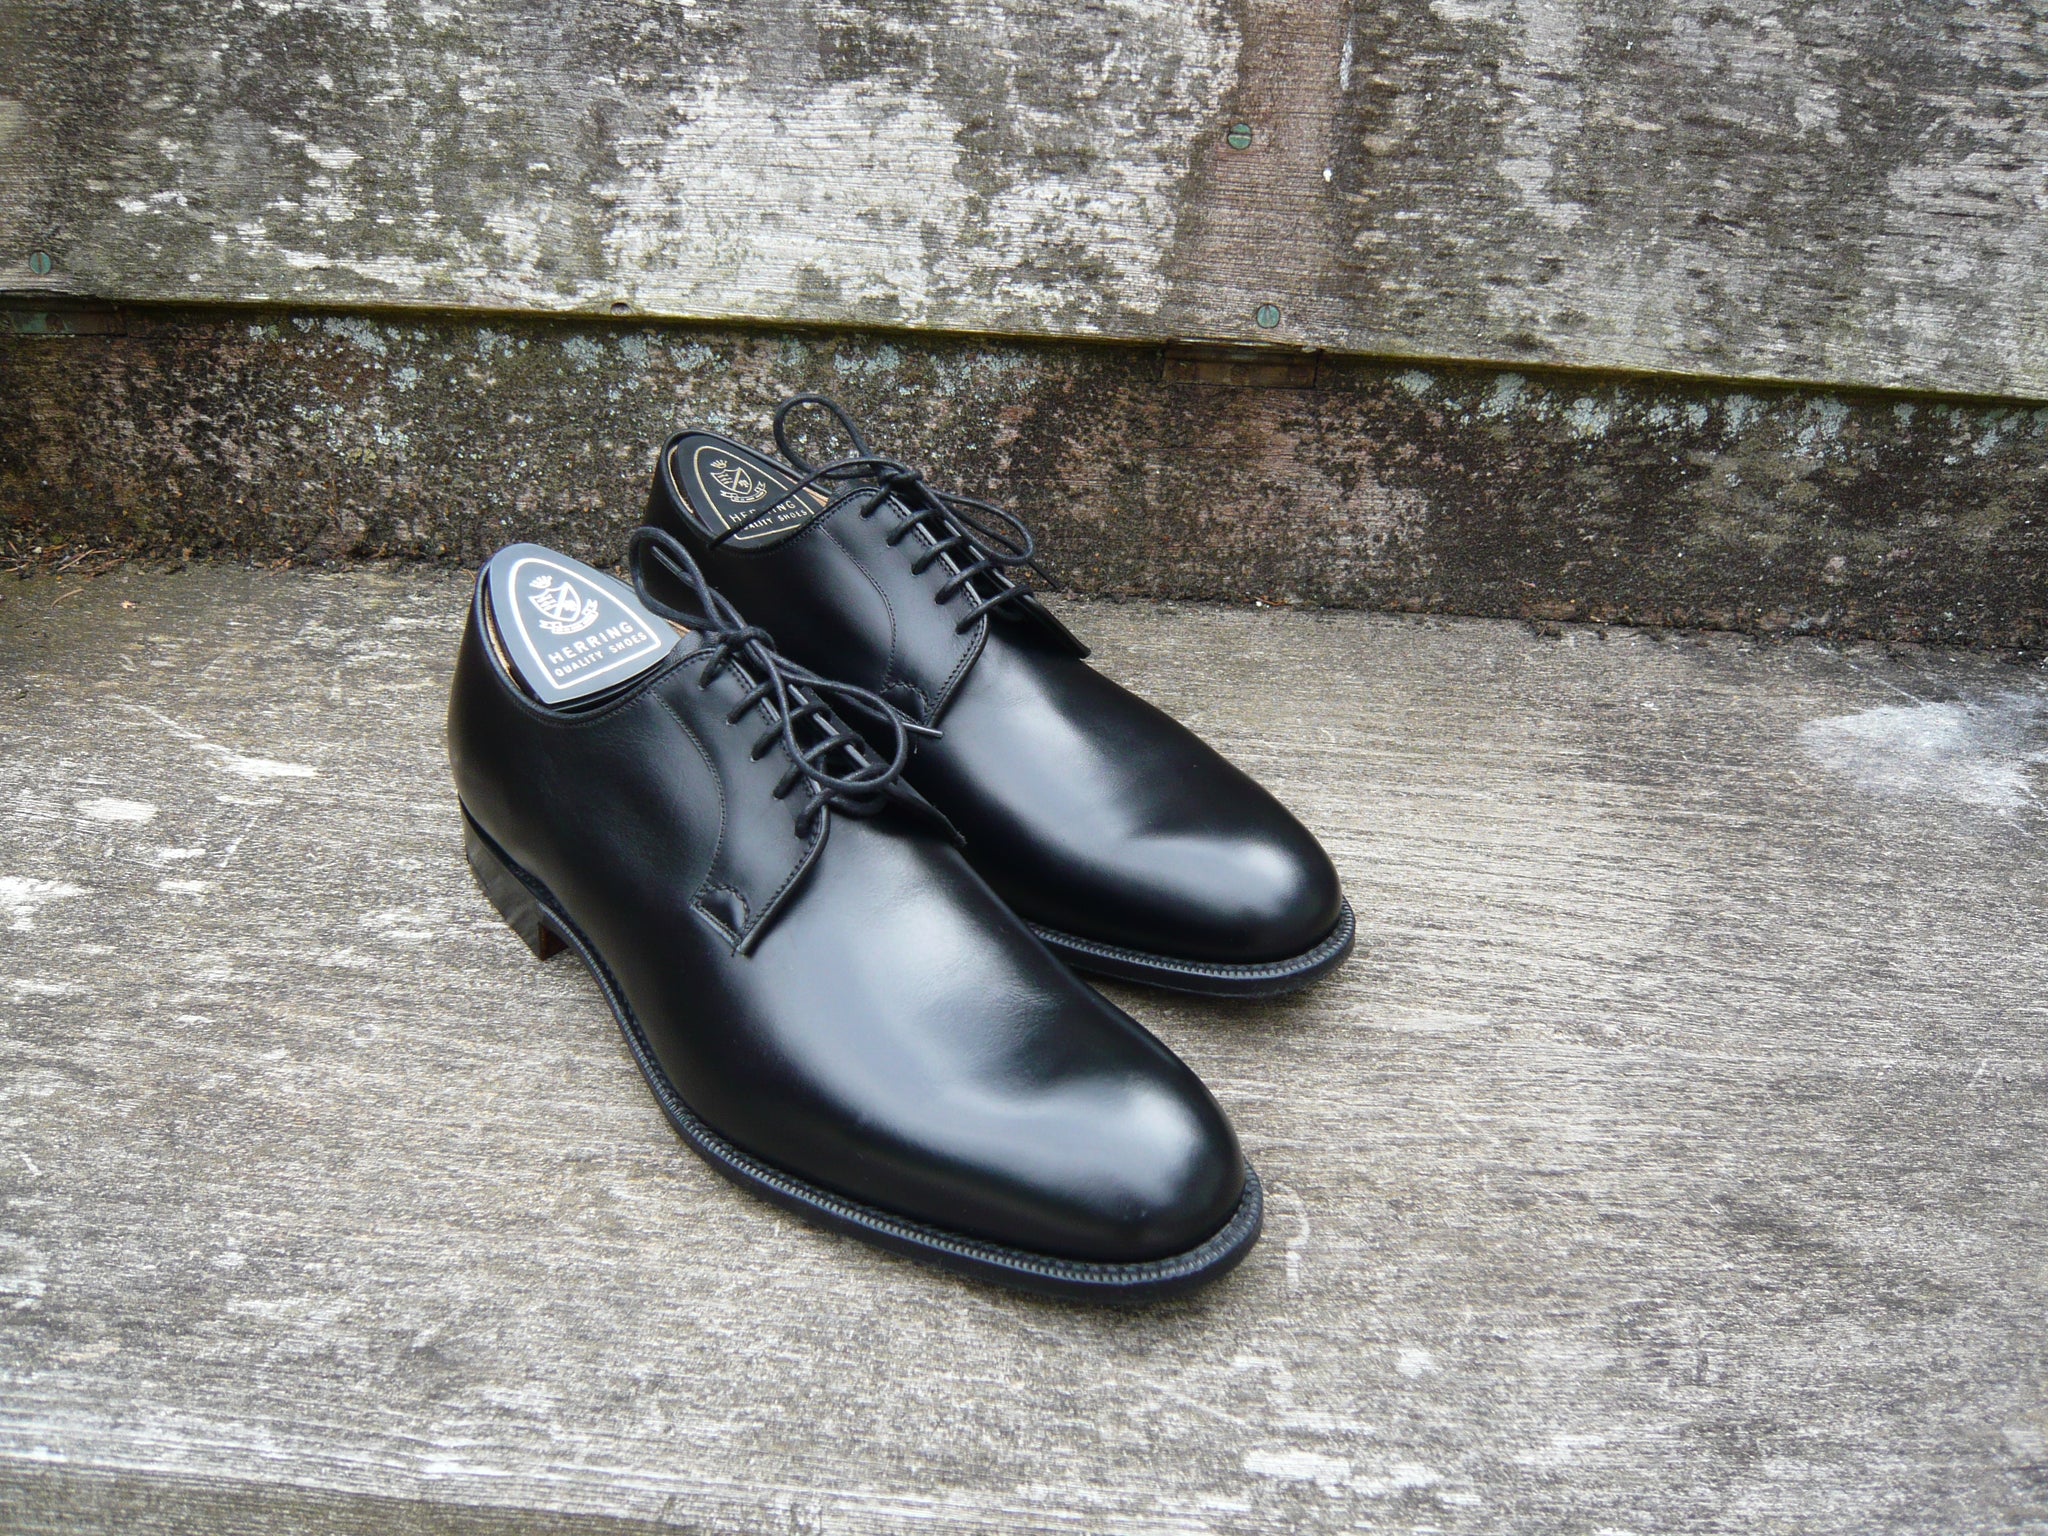 Churchs Church's Custom Grade Derby Shoes Made in England Tan Brown  PatinaUK 7.5 | eBay